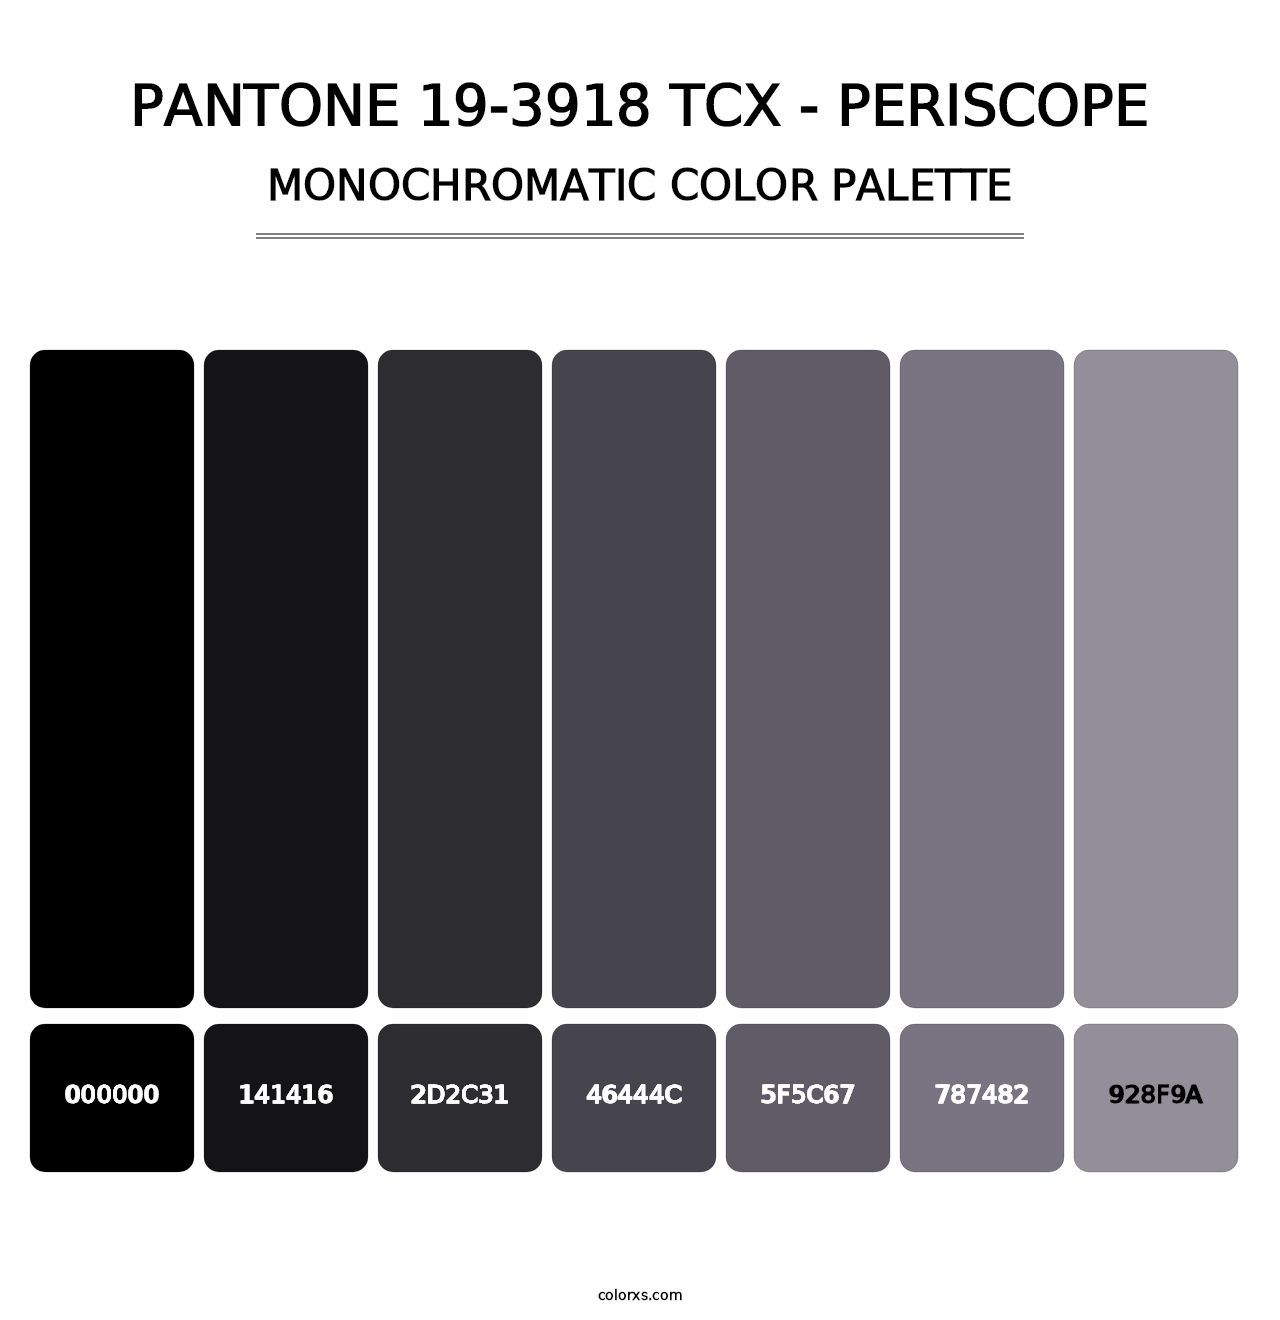 PANTONE 19-3918 TCX - Periscope - Monochromatic Color Palette